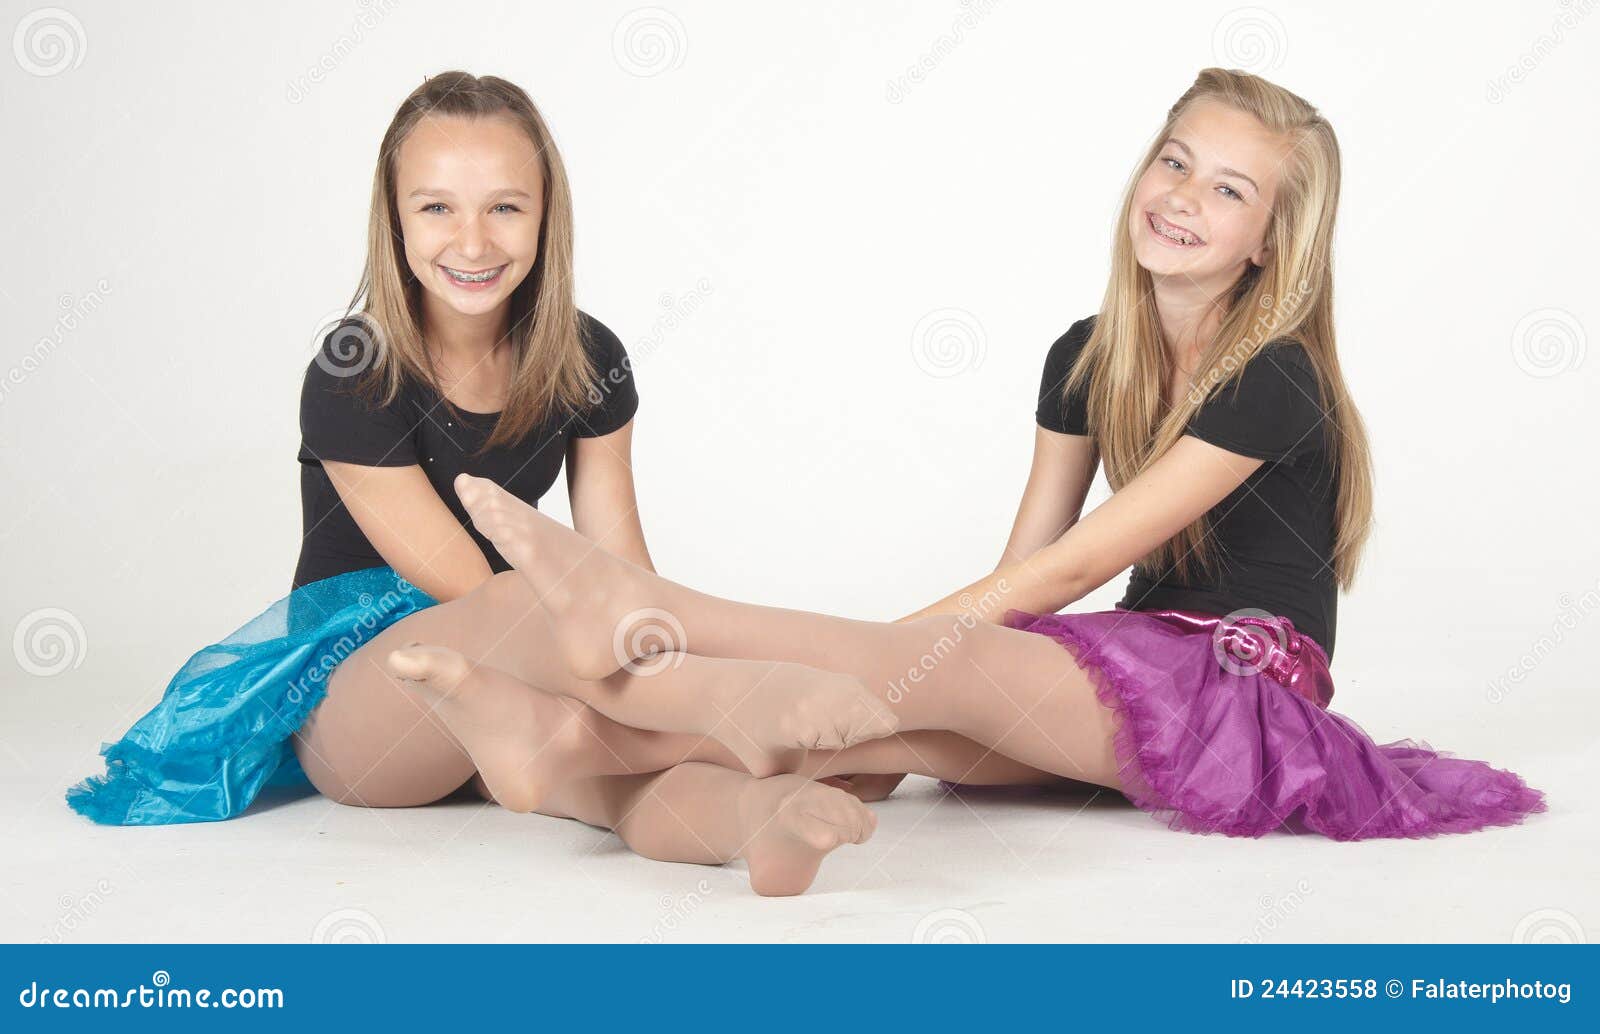 Girls Feet In Stockings